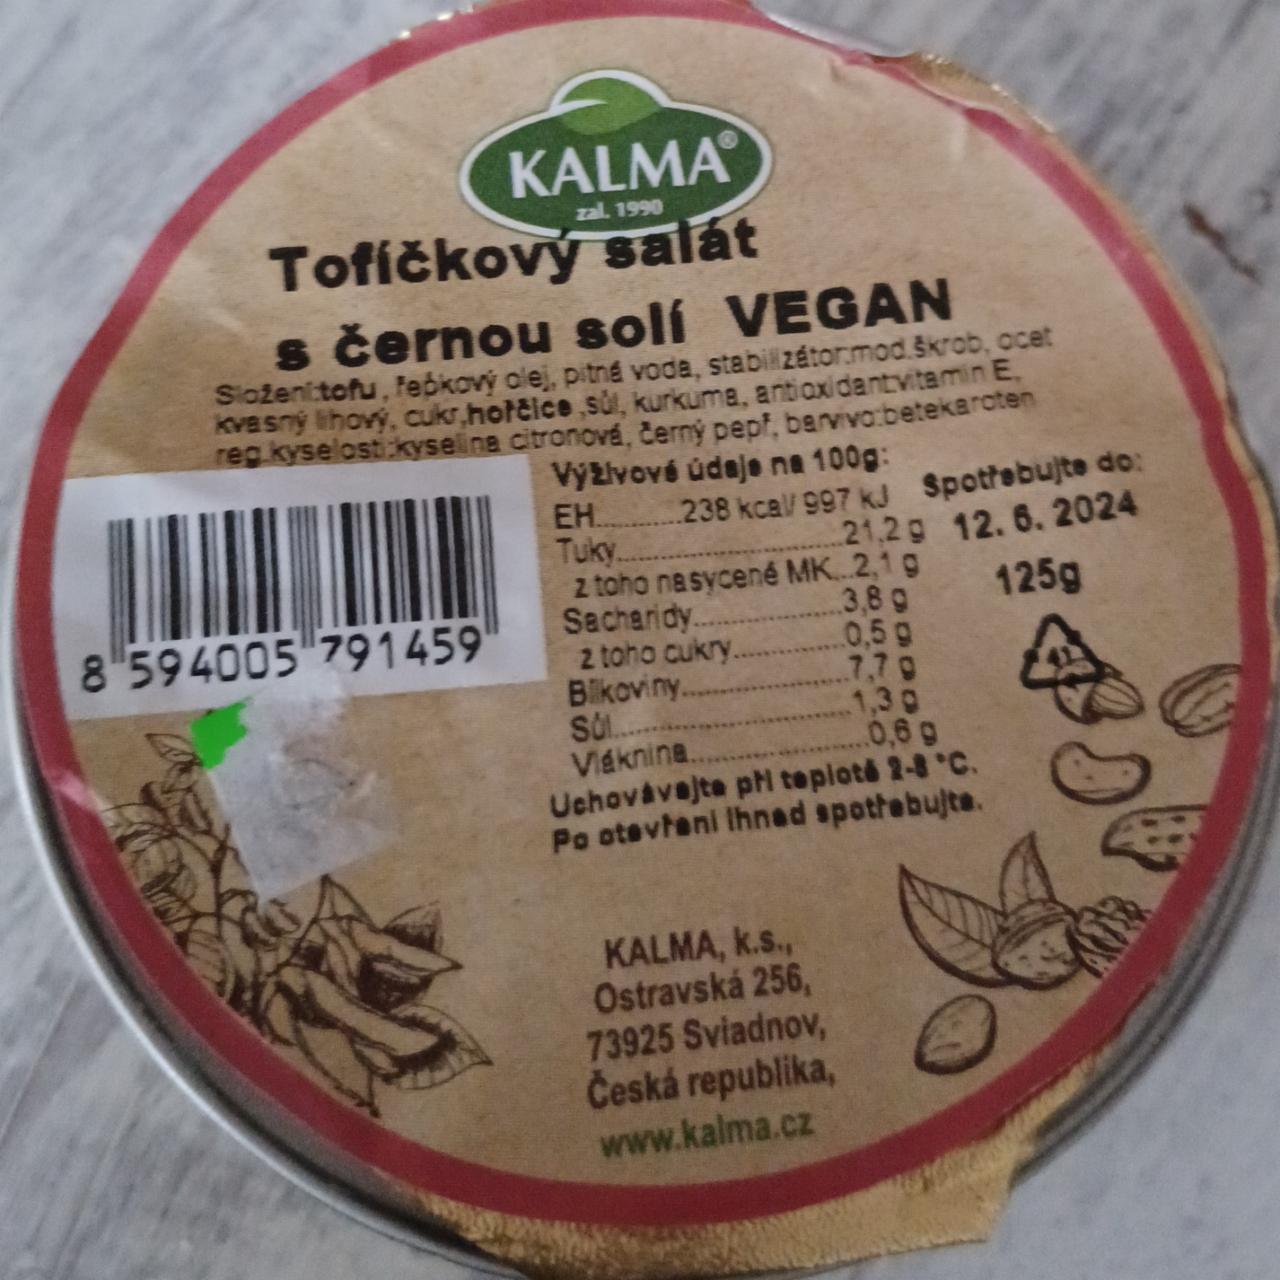 Fotografie - Tofíčkový salát s černou solí Vegan Kalma